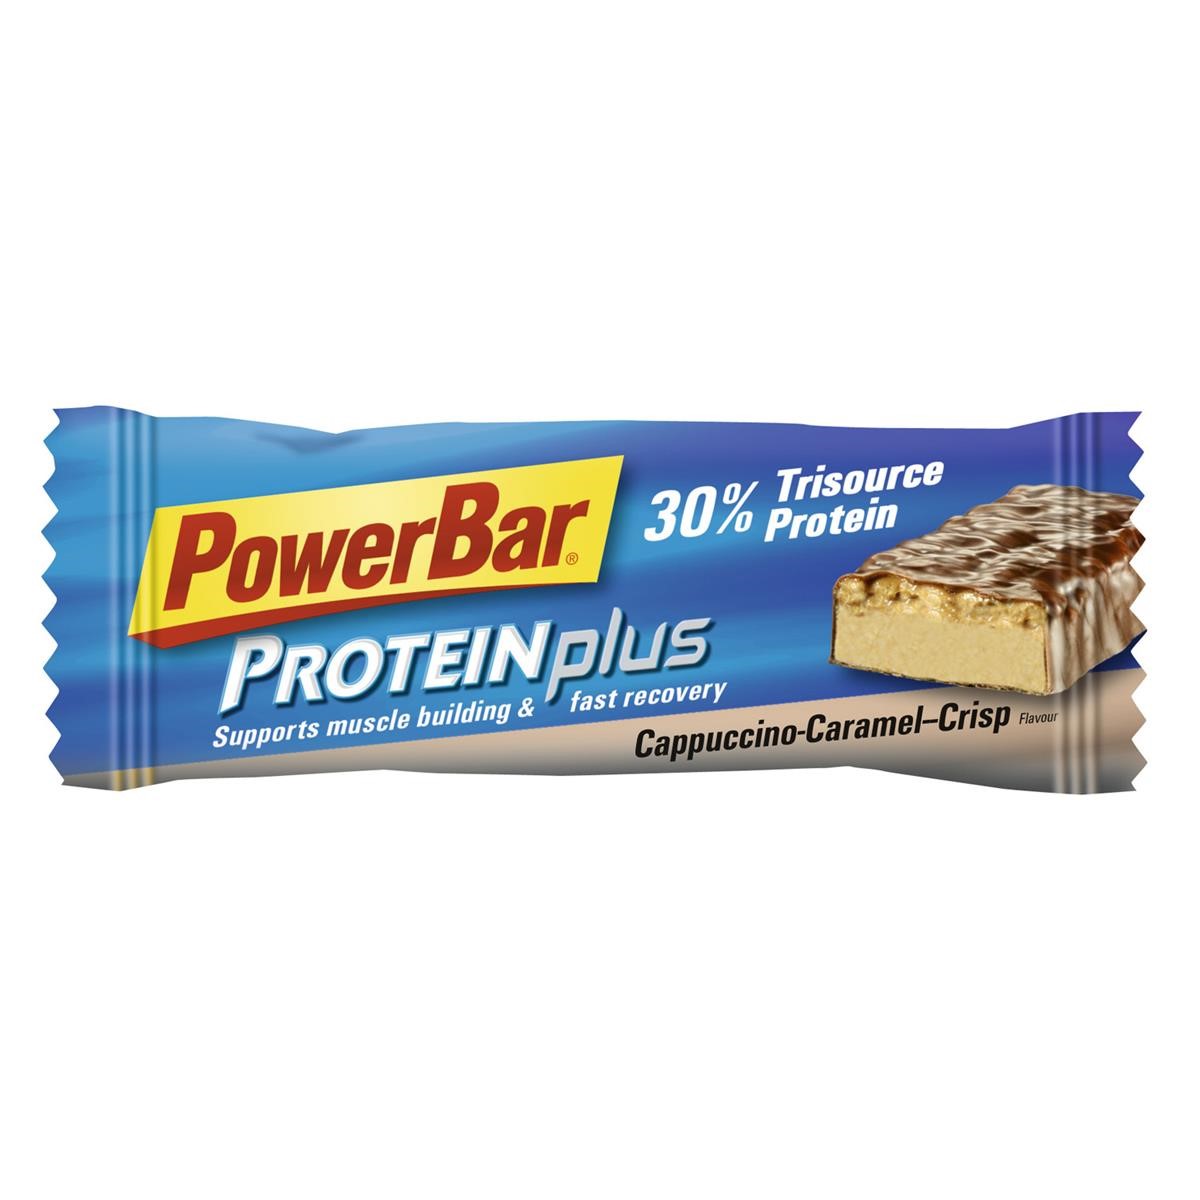 Lebensmittel/Fanartikel/Medien-Essen & Getränke - PowerBar Protein Plus Riegel 30% Cappuccino-Caramel-Crisp, 55g